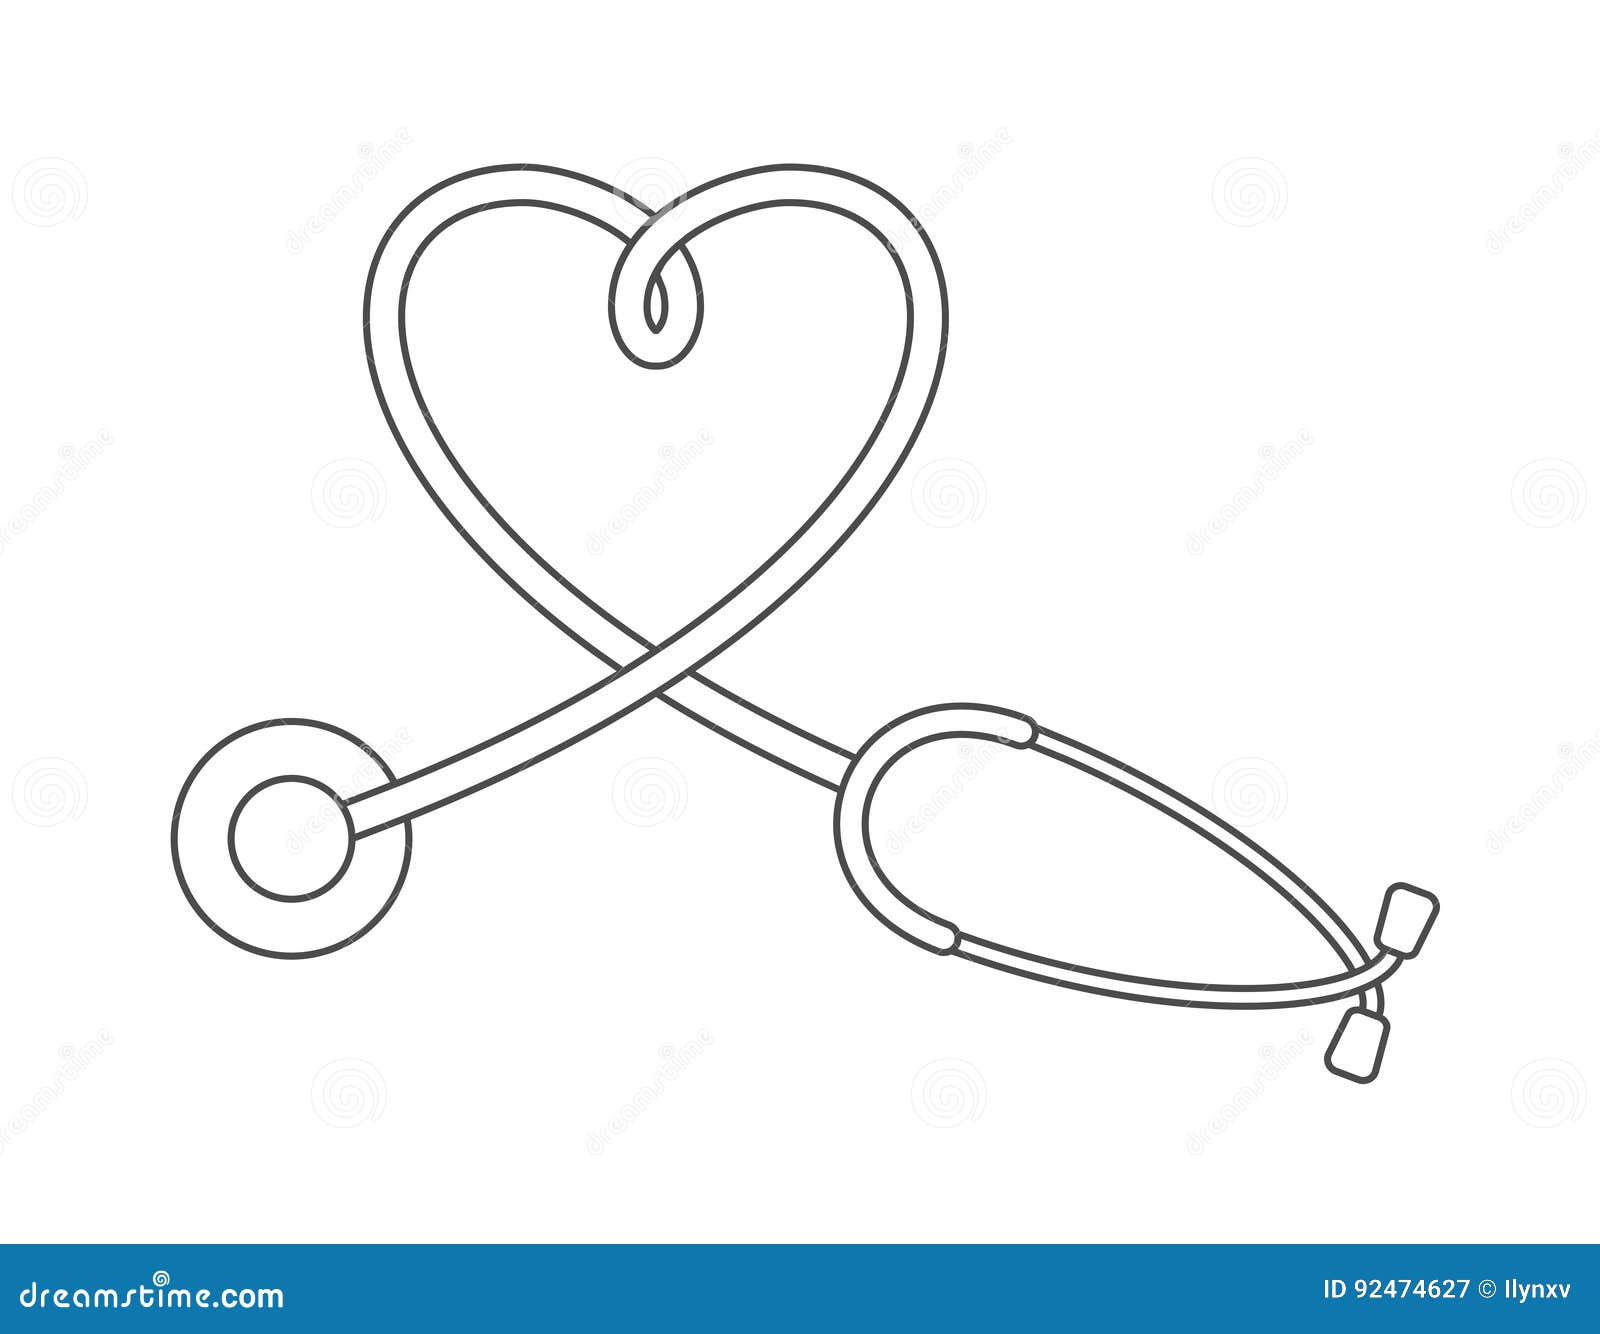 Stethoscope line icon stock vector. Illustration of